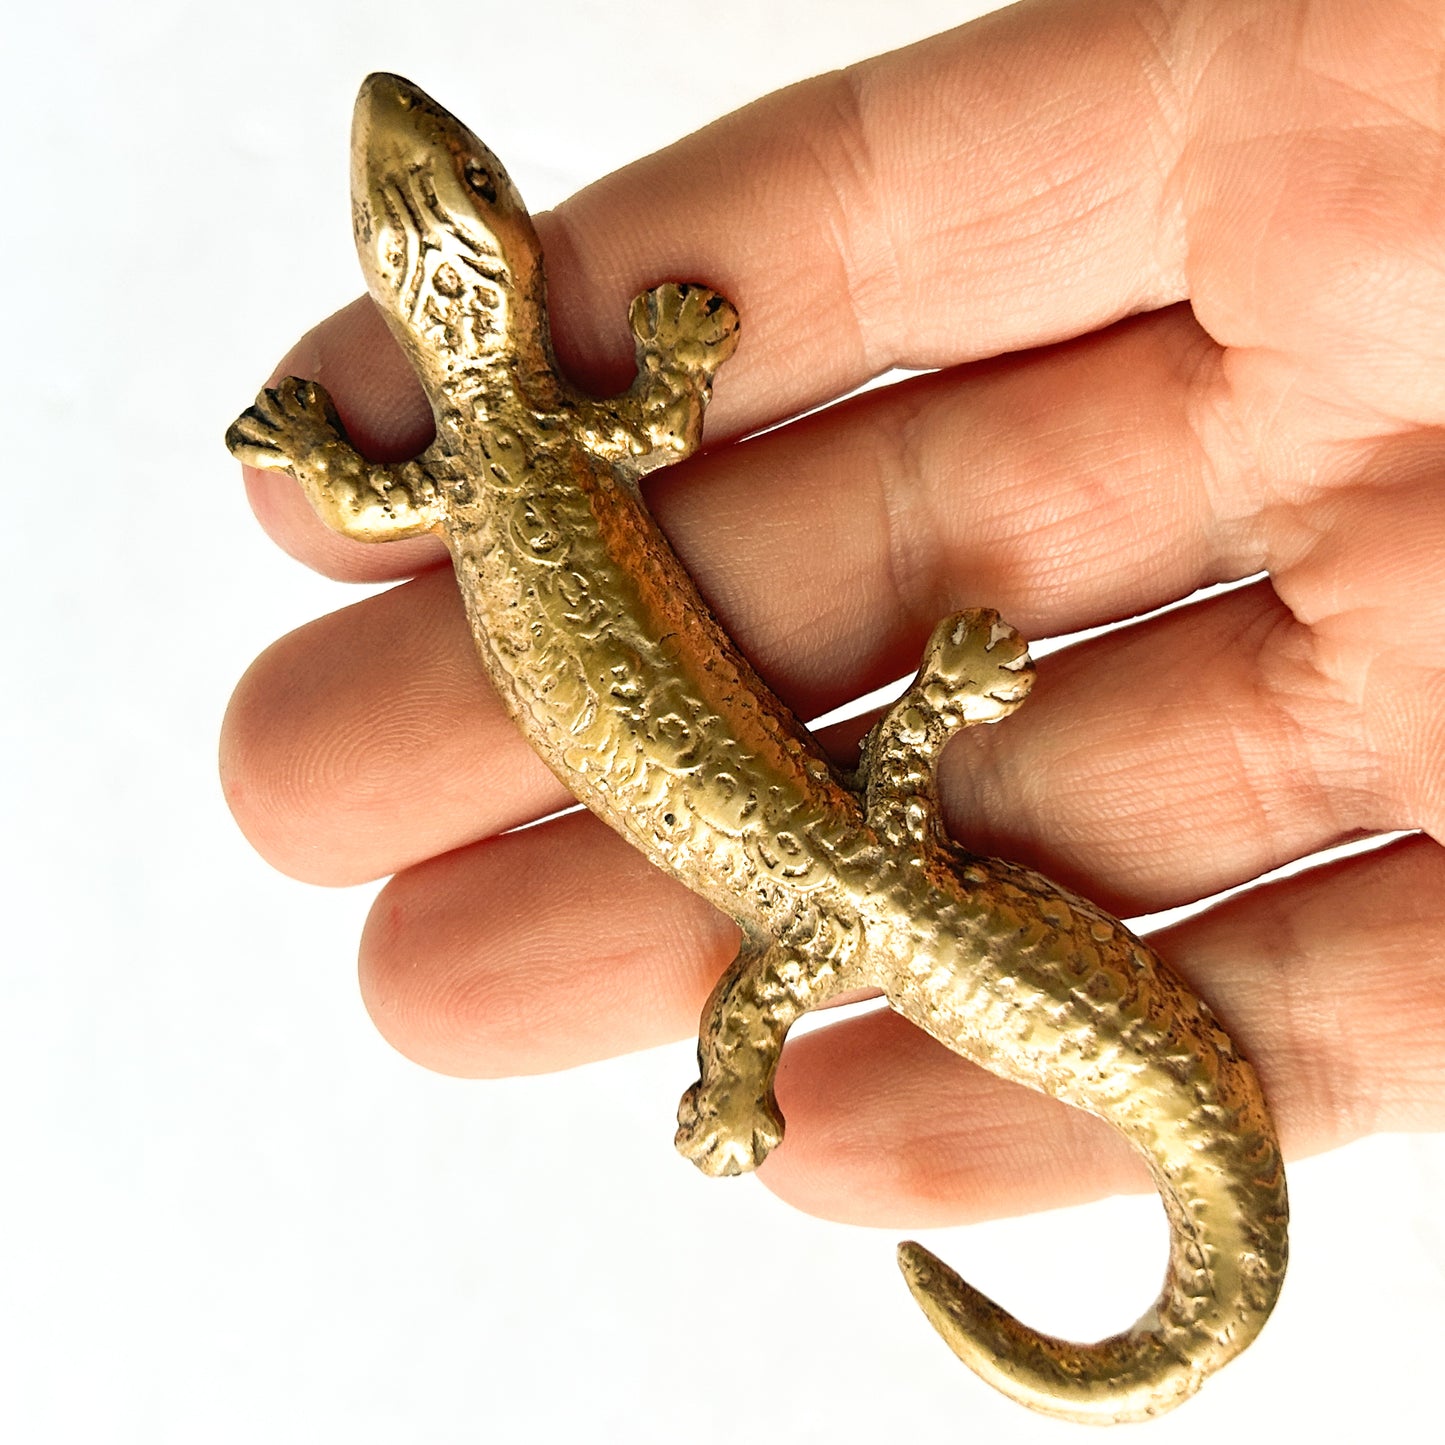 Vintage brass salamander / gecko figurine